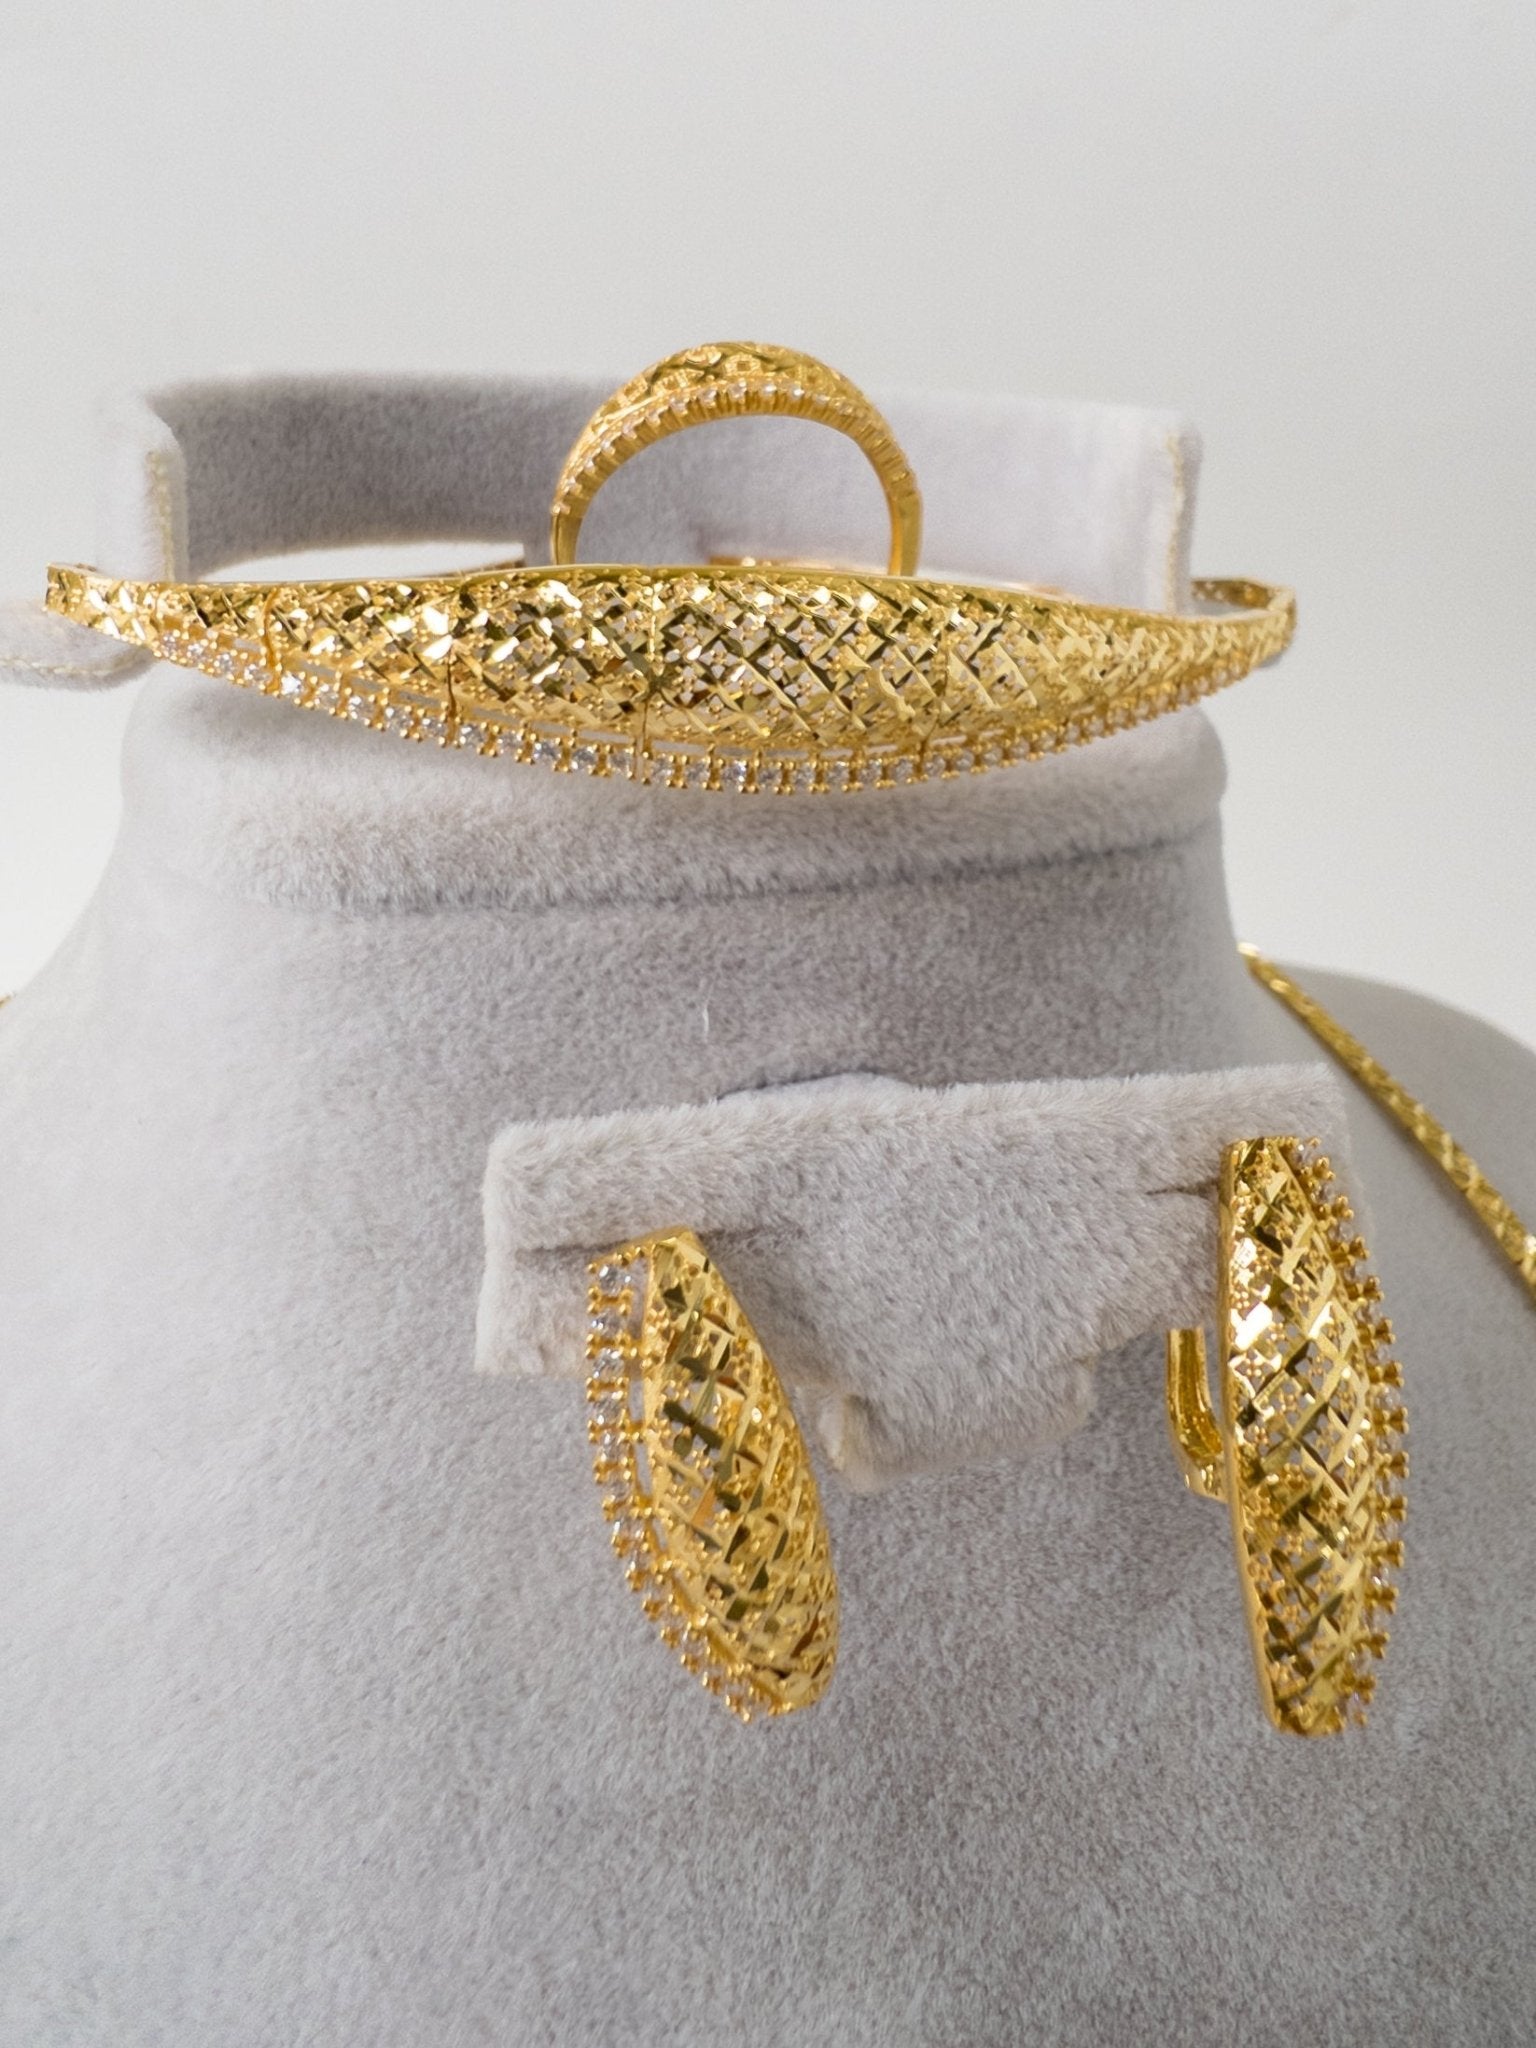 Two-Color Dubai Gold Rings For Women Men 24k Color Ethiopian African Jewelry  Saudi Arabic Wedding Ring Bride Gift - AliExpress